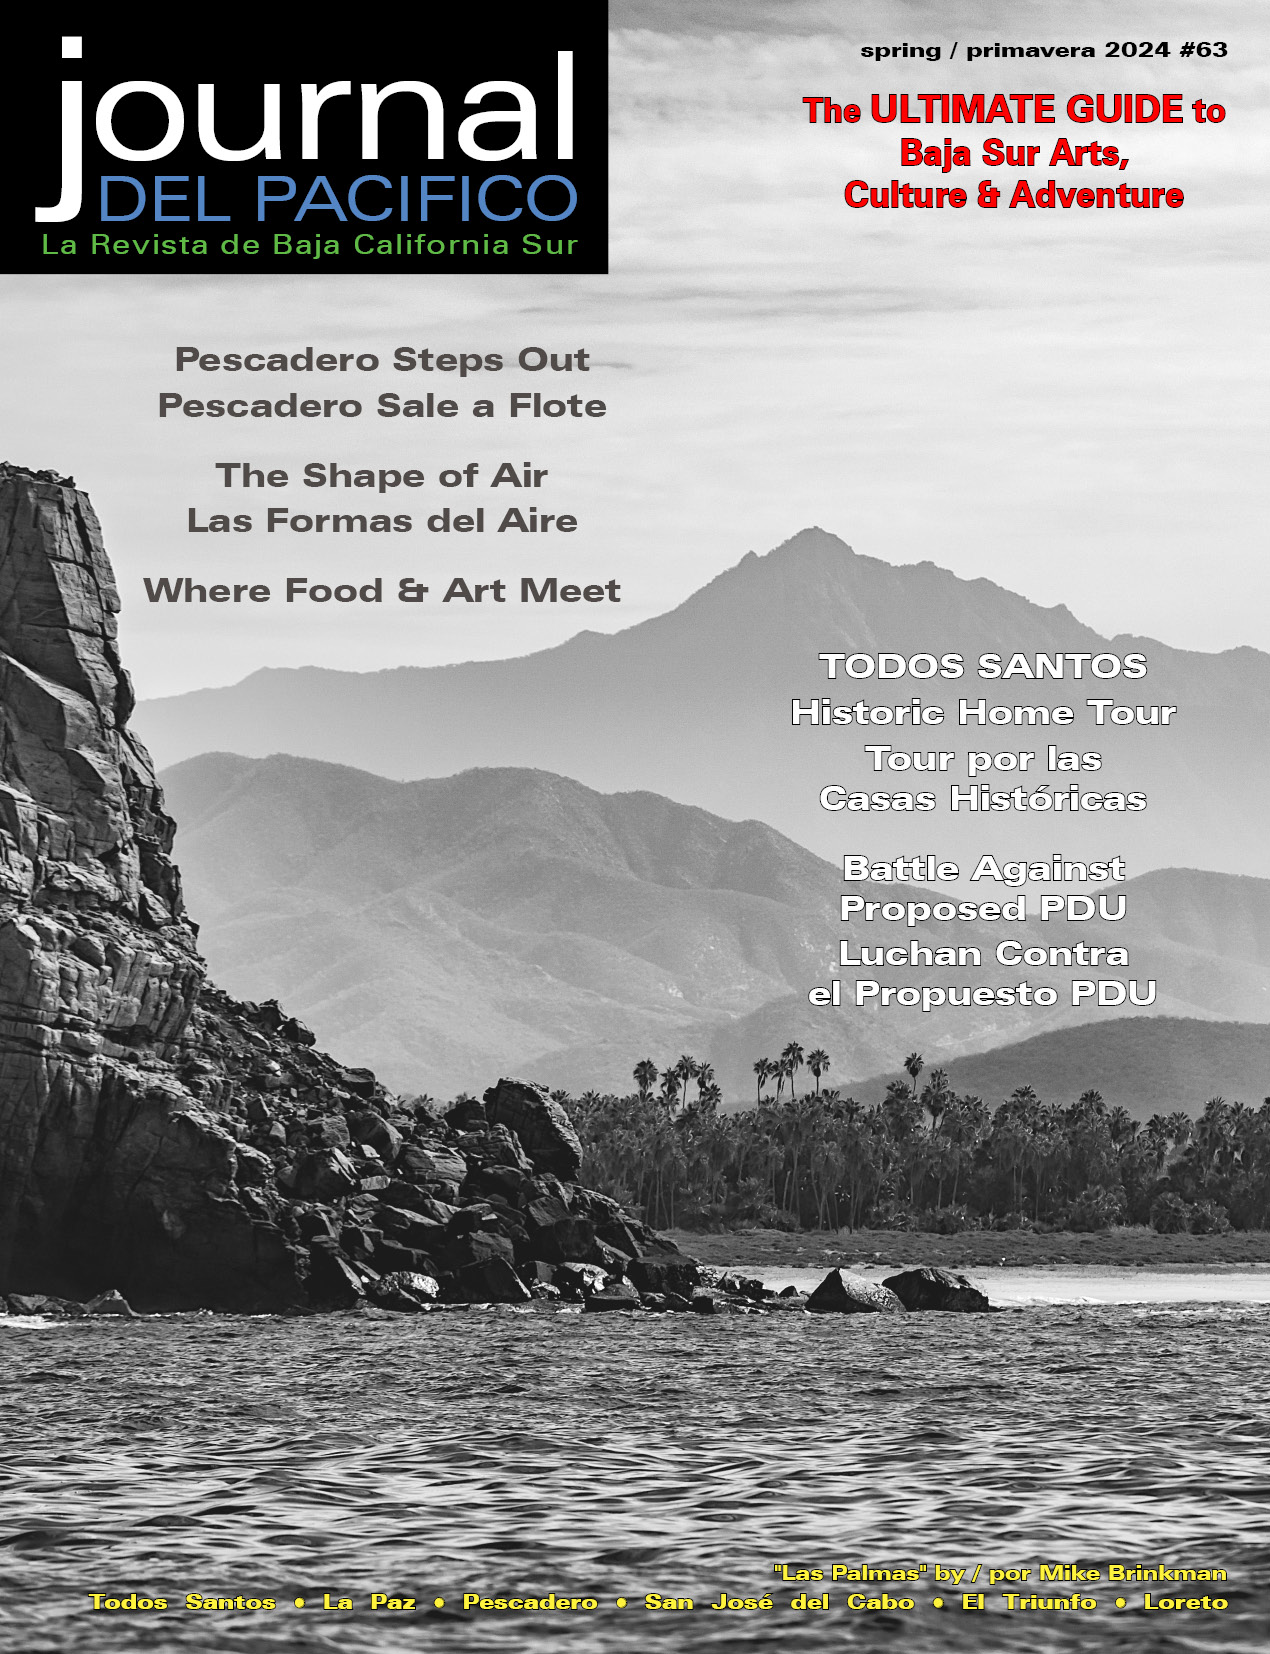 Spring/Primavera 2024 Issue of Journal del Pacifico